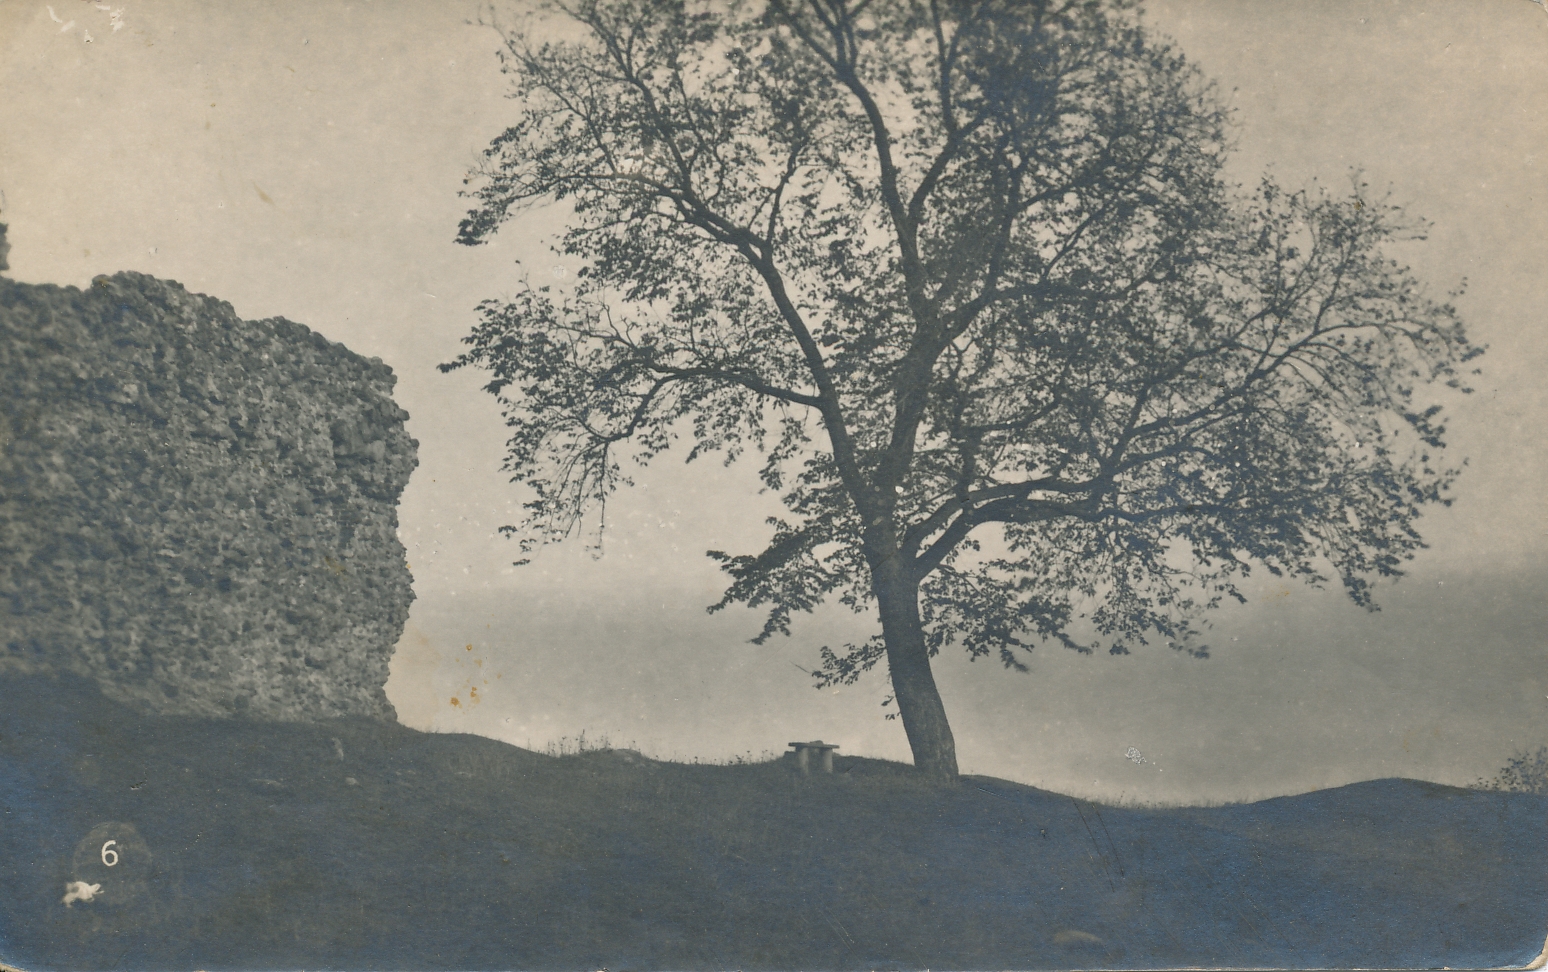 foto, Viljandi, lossimäed, I Kirsimägi, u 1920, foto J. Riet (?)